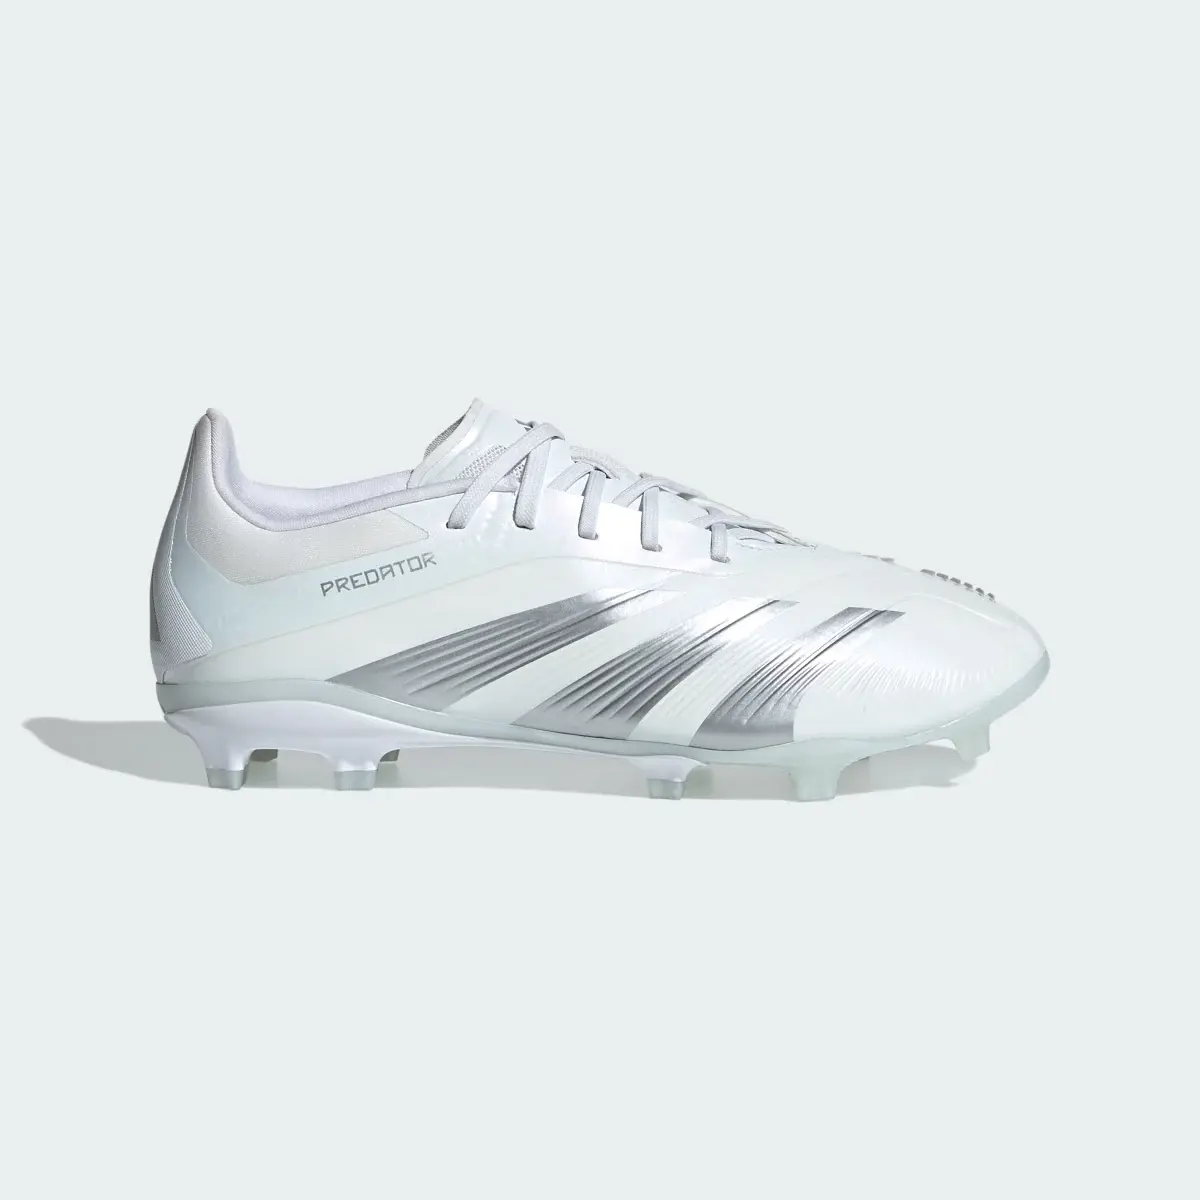 Adidas Predator Elite Firm Ground Football Boots. 2